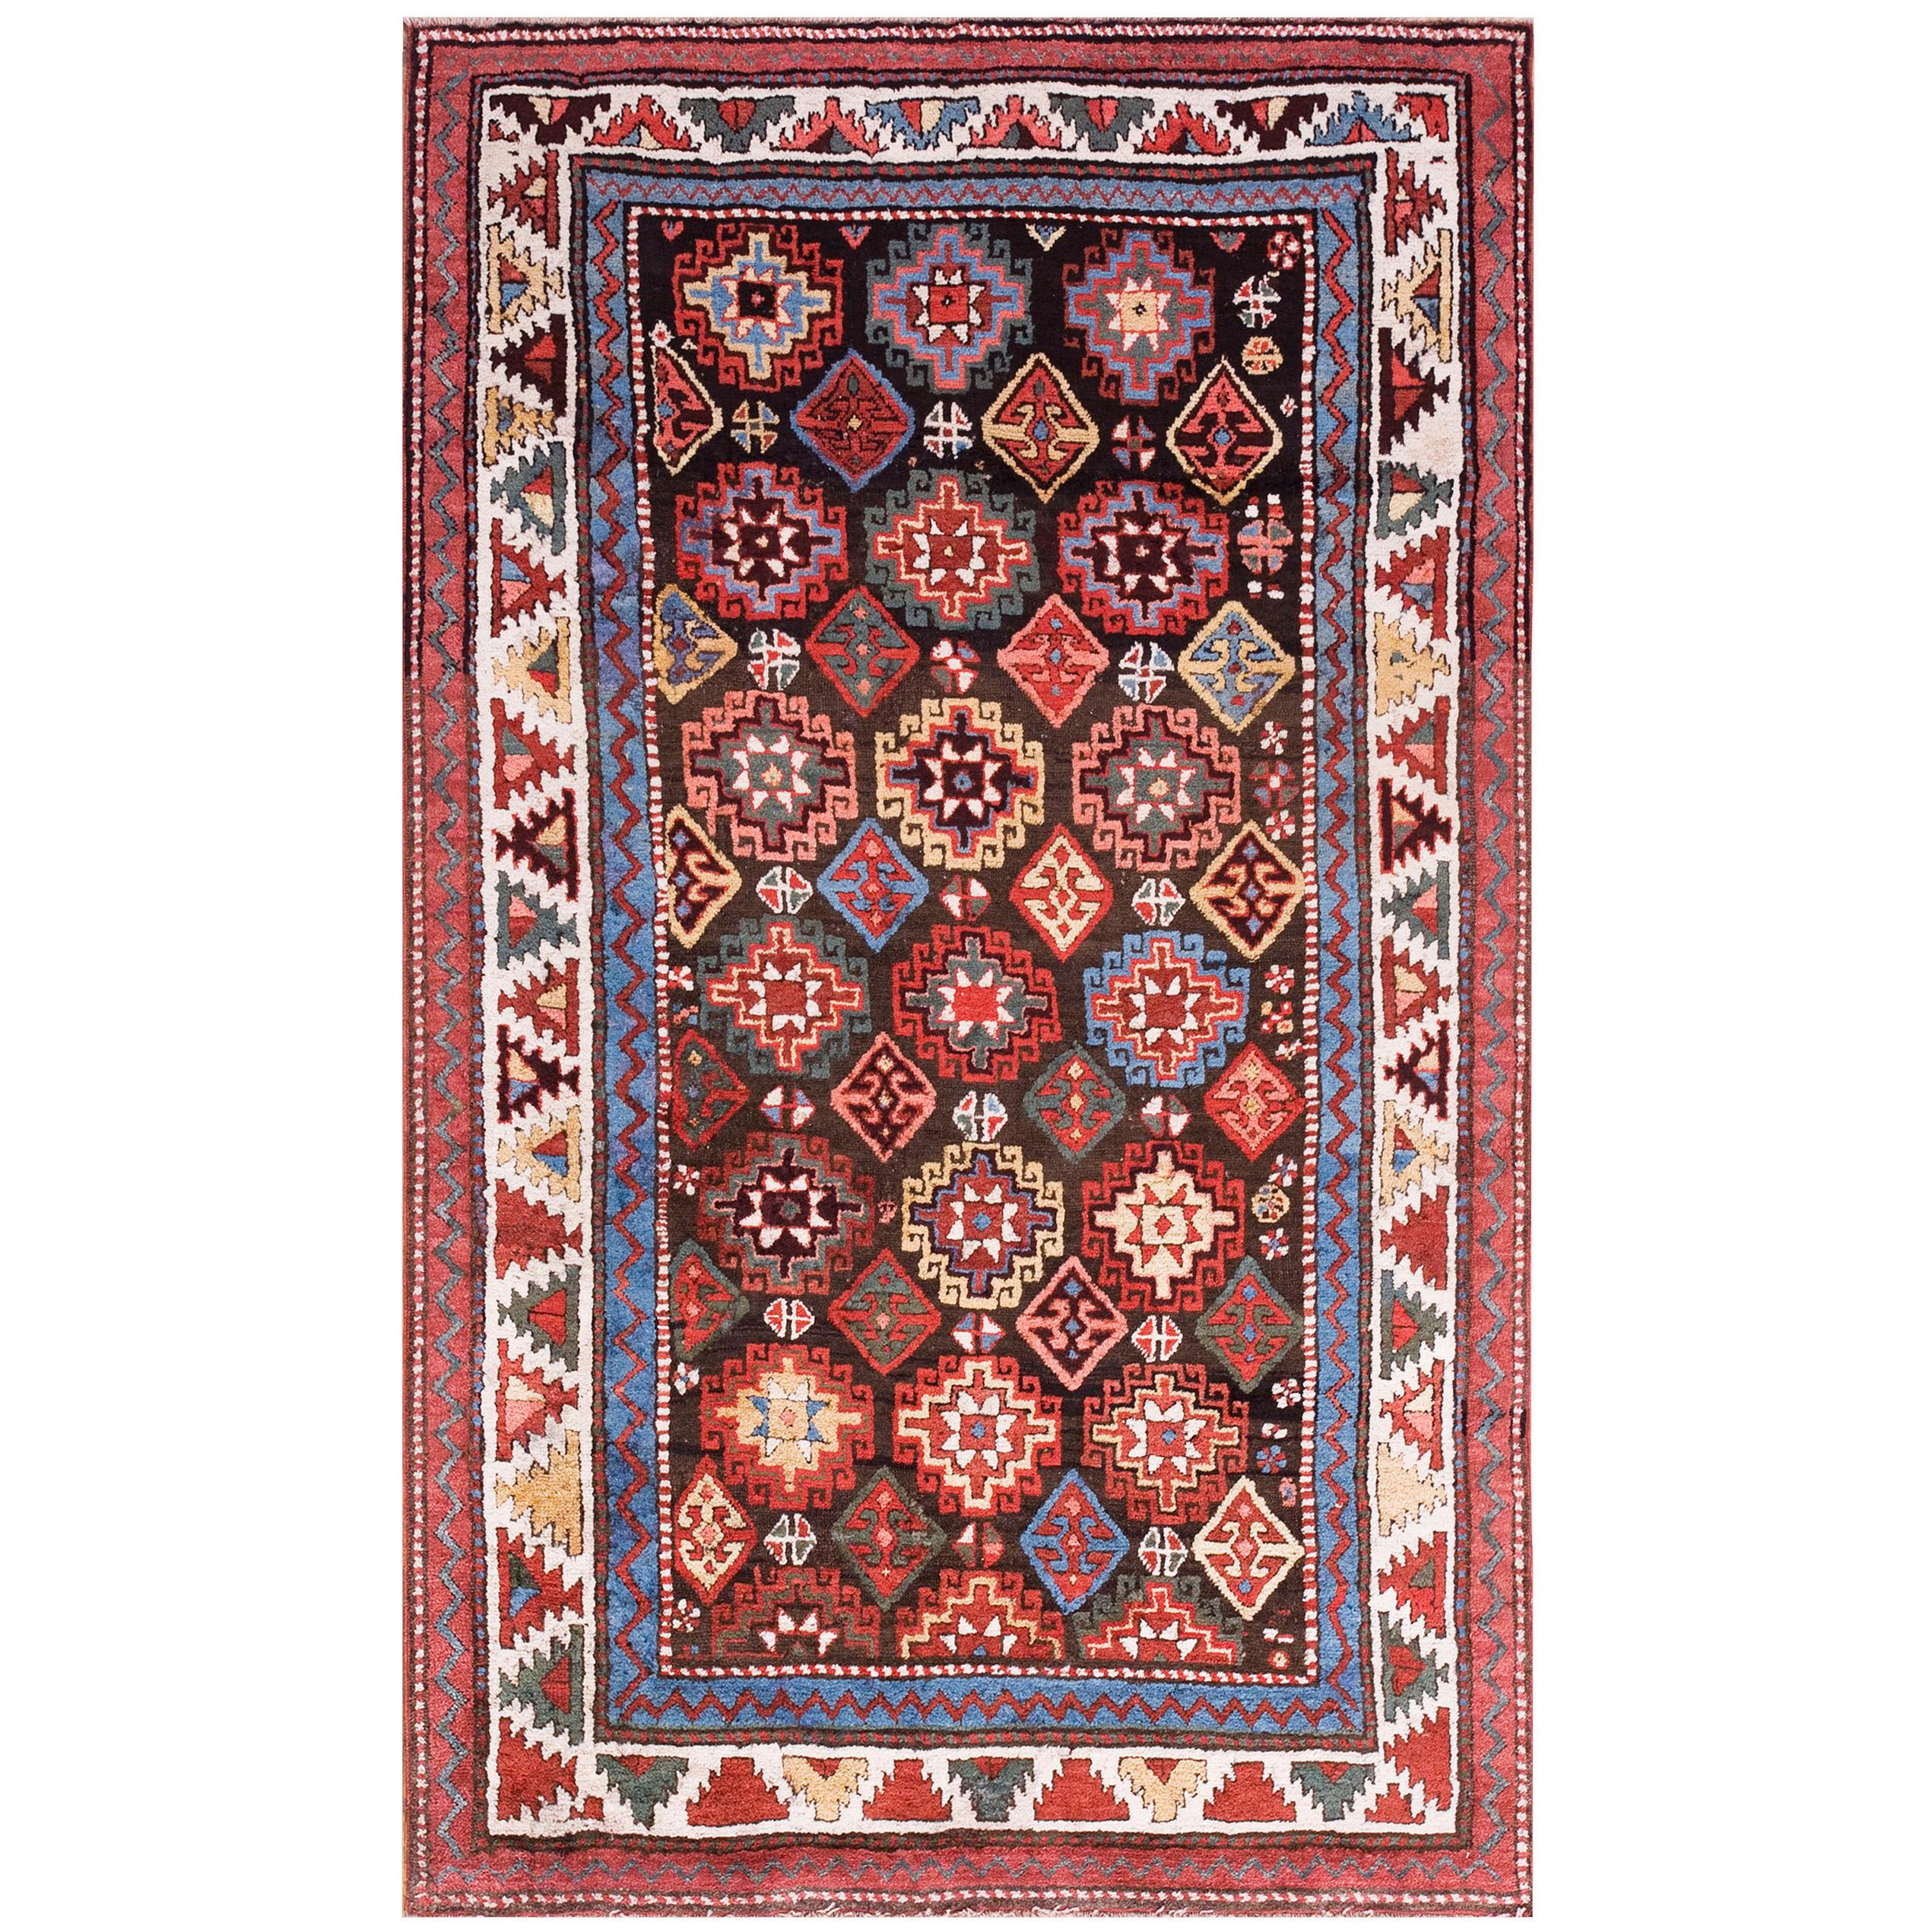 Late 19th Century Caucasian Kazak Carpet ( 3'6" X 6'3" - 106 X 190 cm ) For Sale